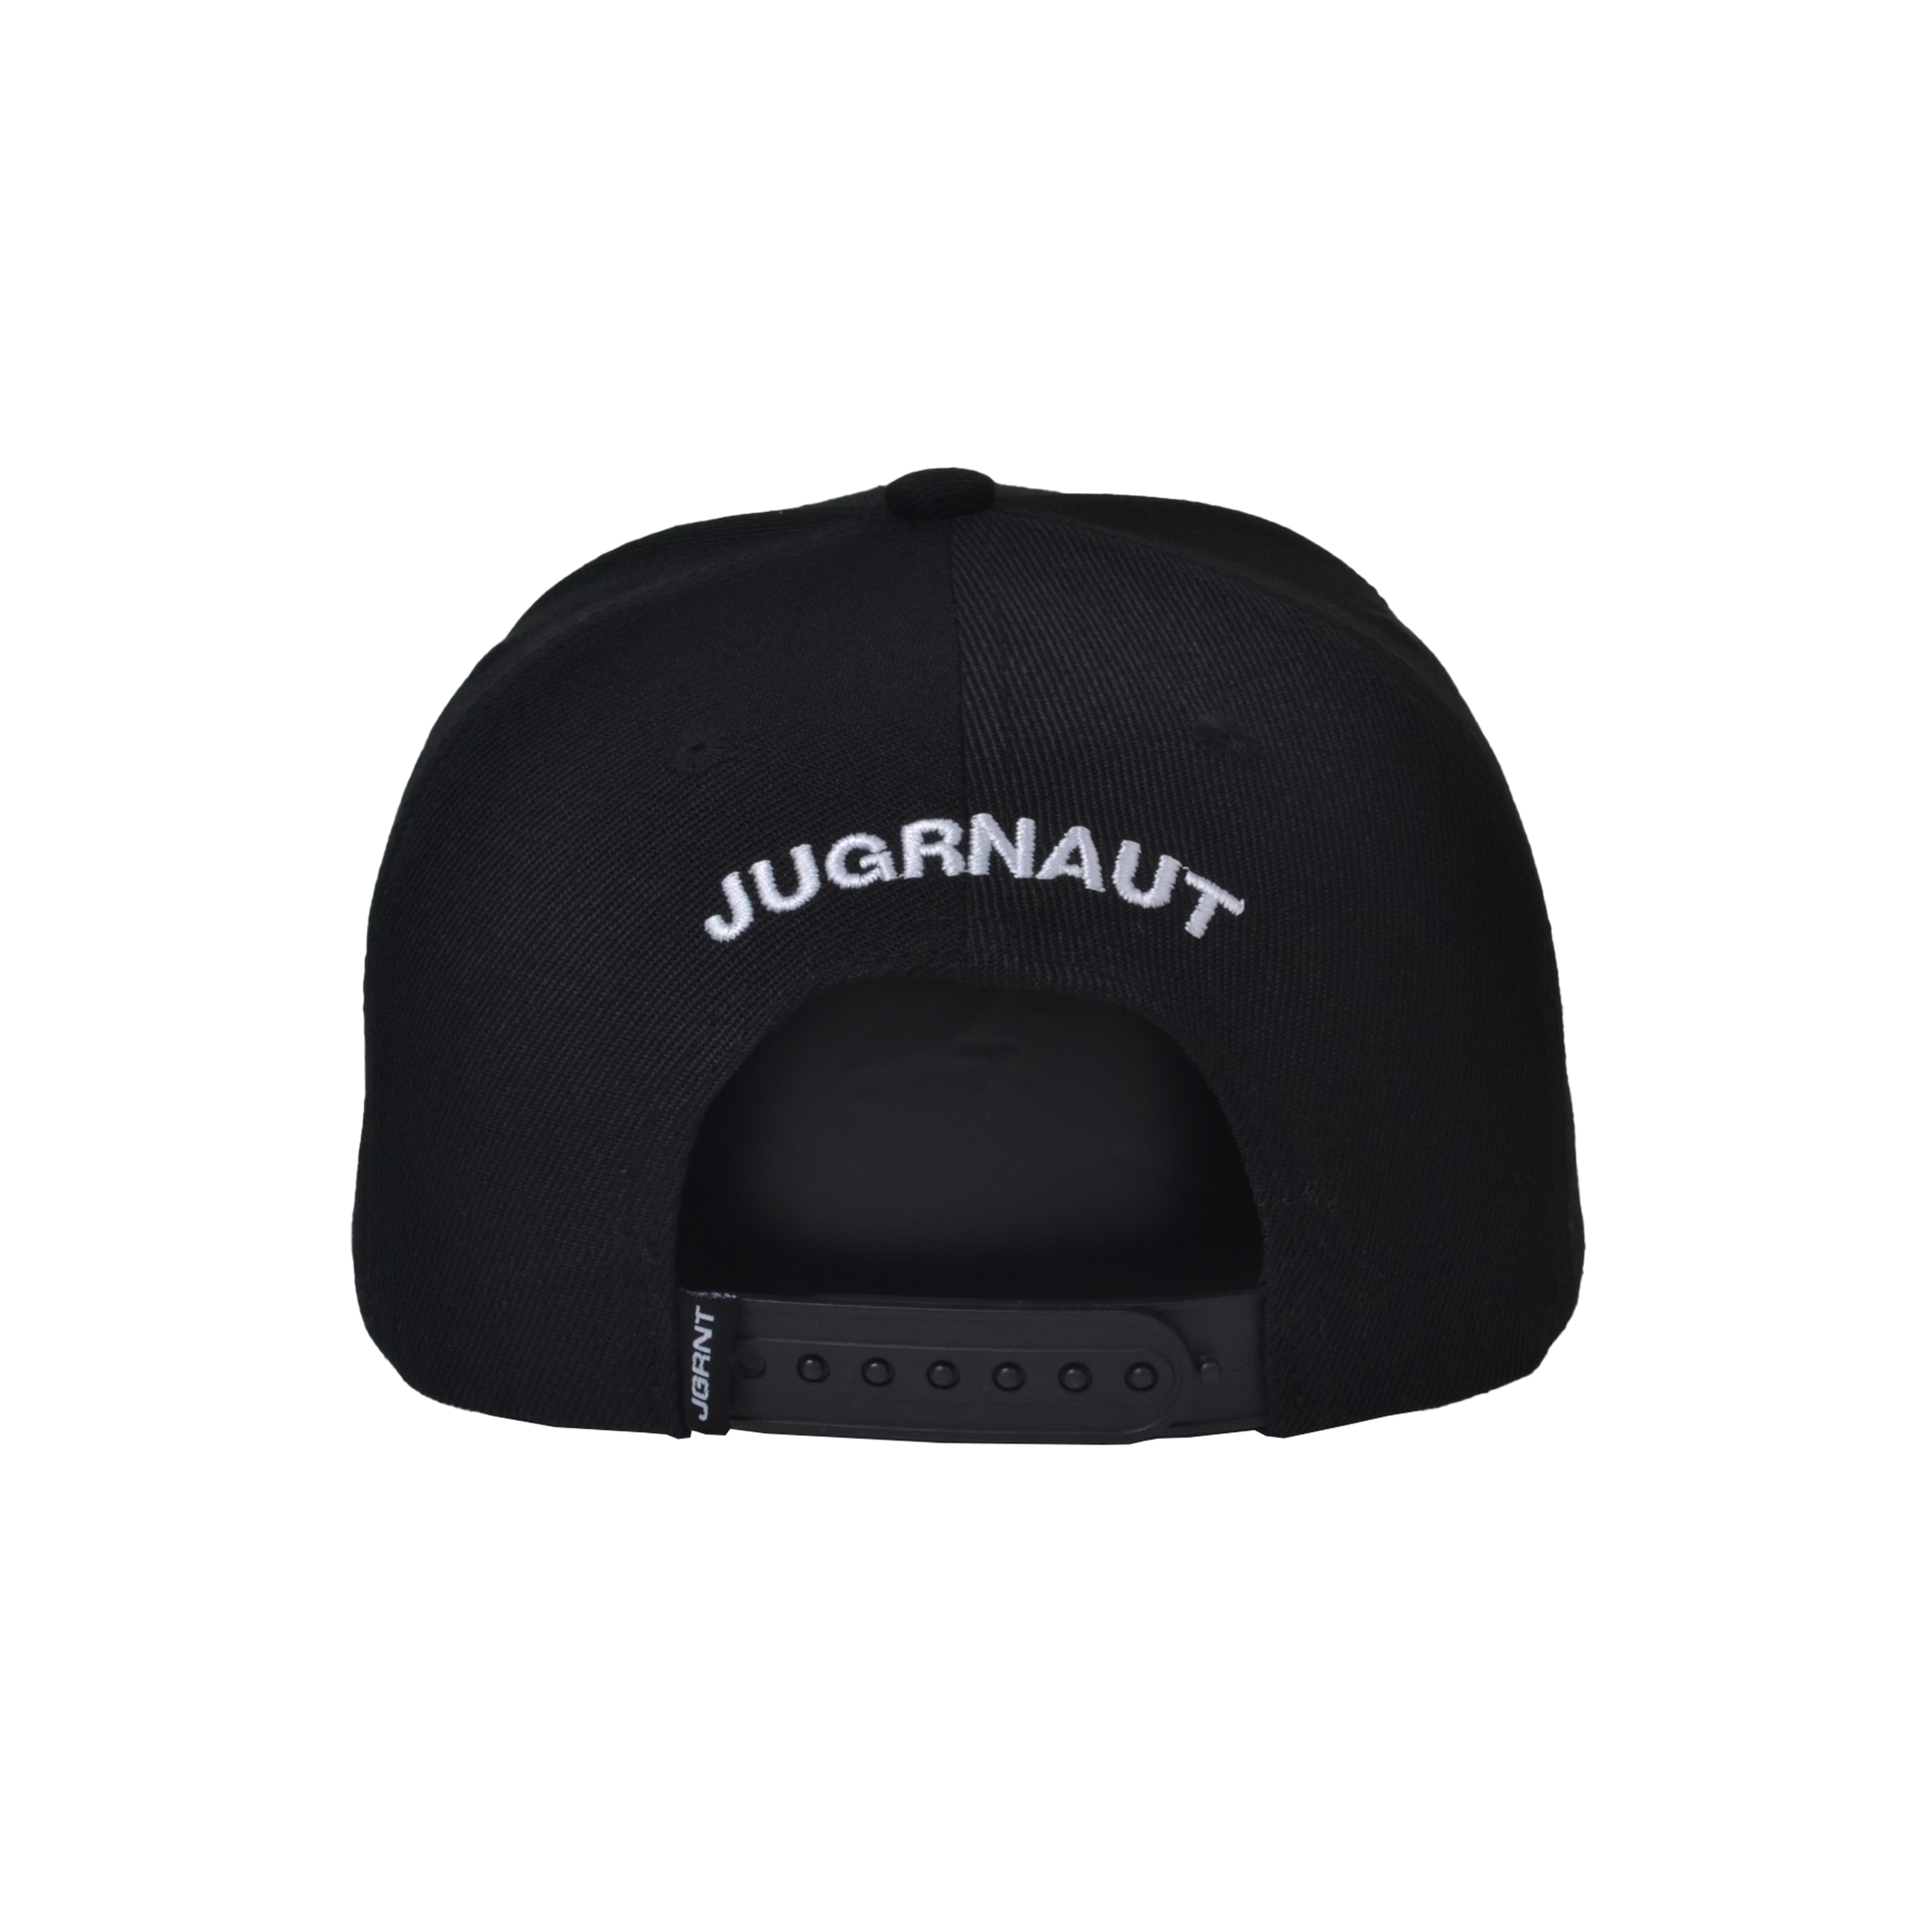 Jugrnaut Jugrnaut LAX Snap Black